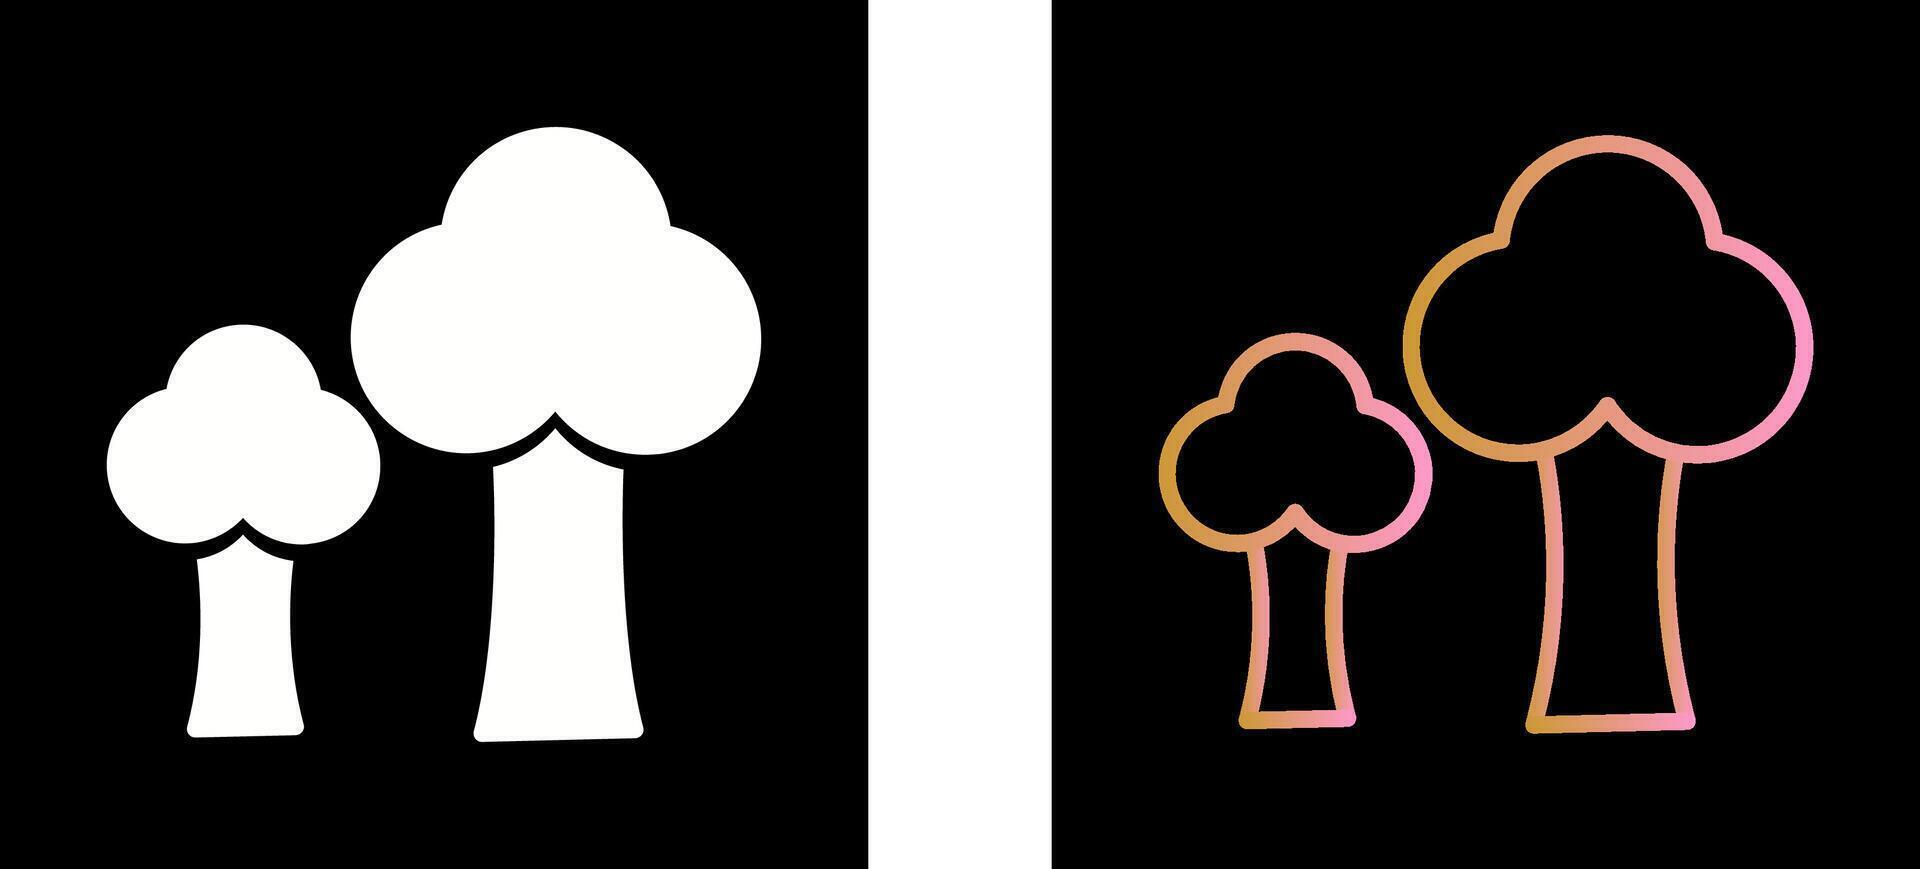 Trees Icon Design vector